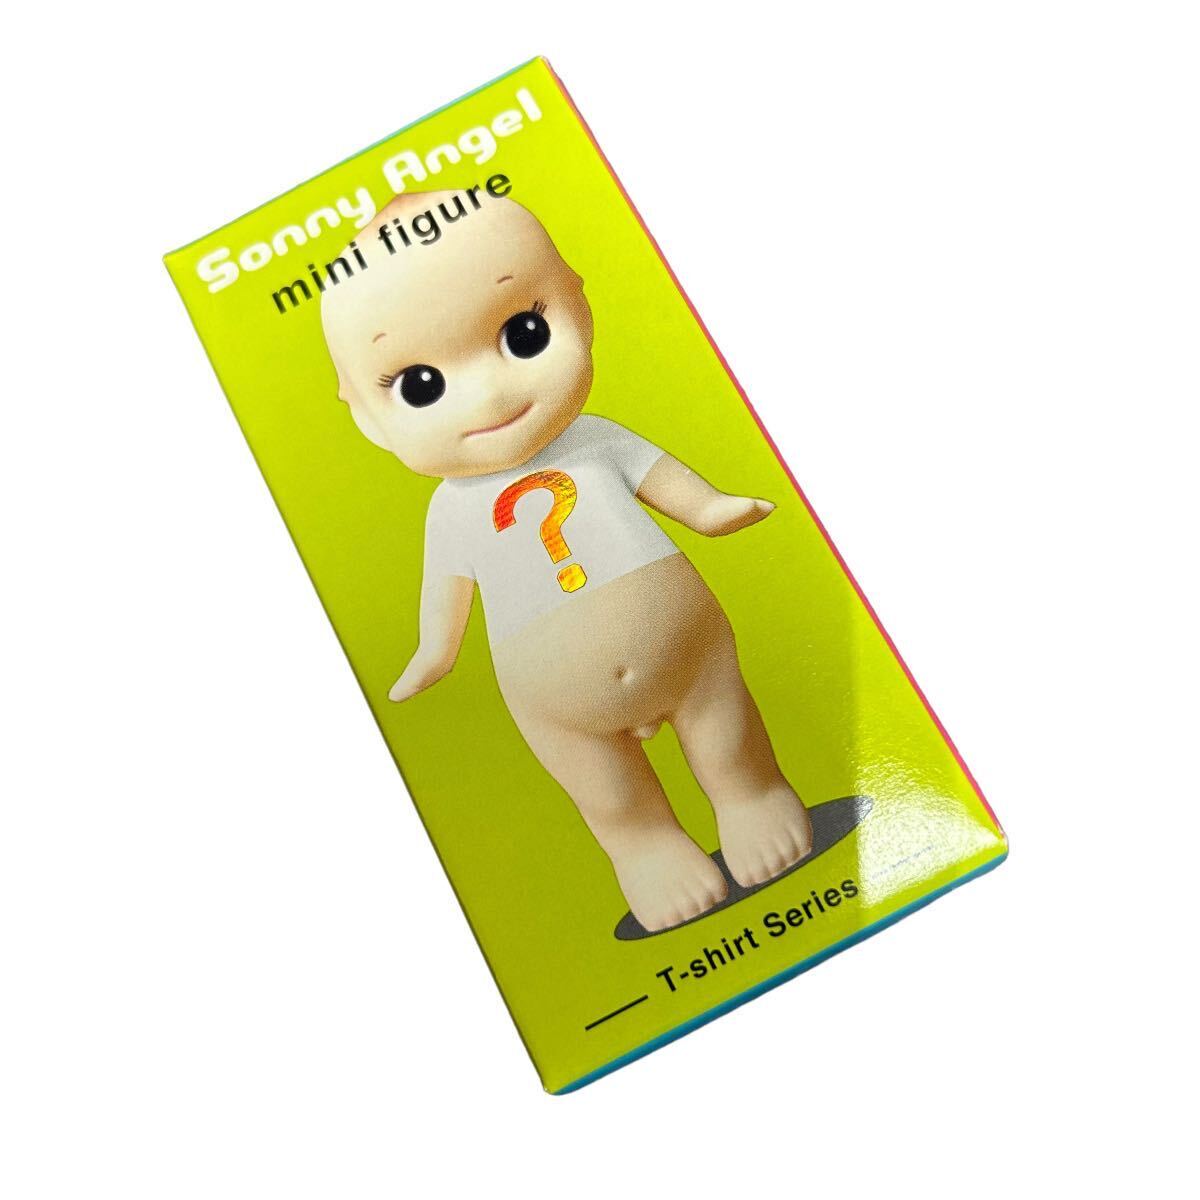 Sonny Angel mini figure T-shirt Series нераспечатанный Sony Angel футболка серии 12 в коробке пупс кукла sofvi 